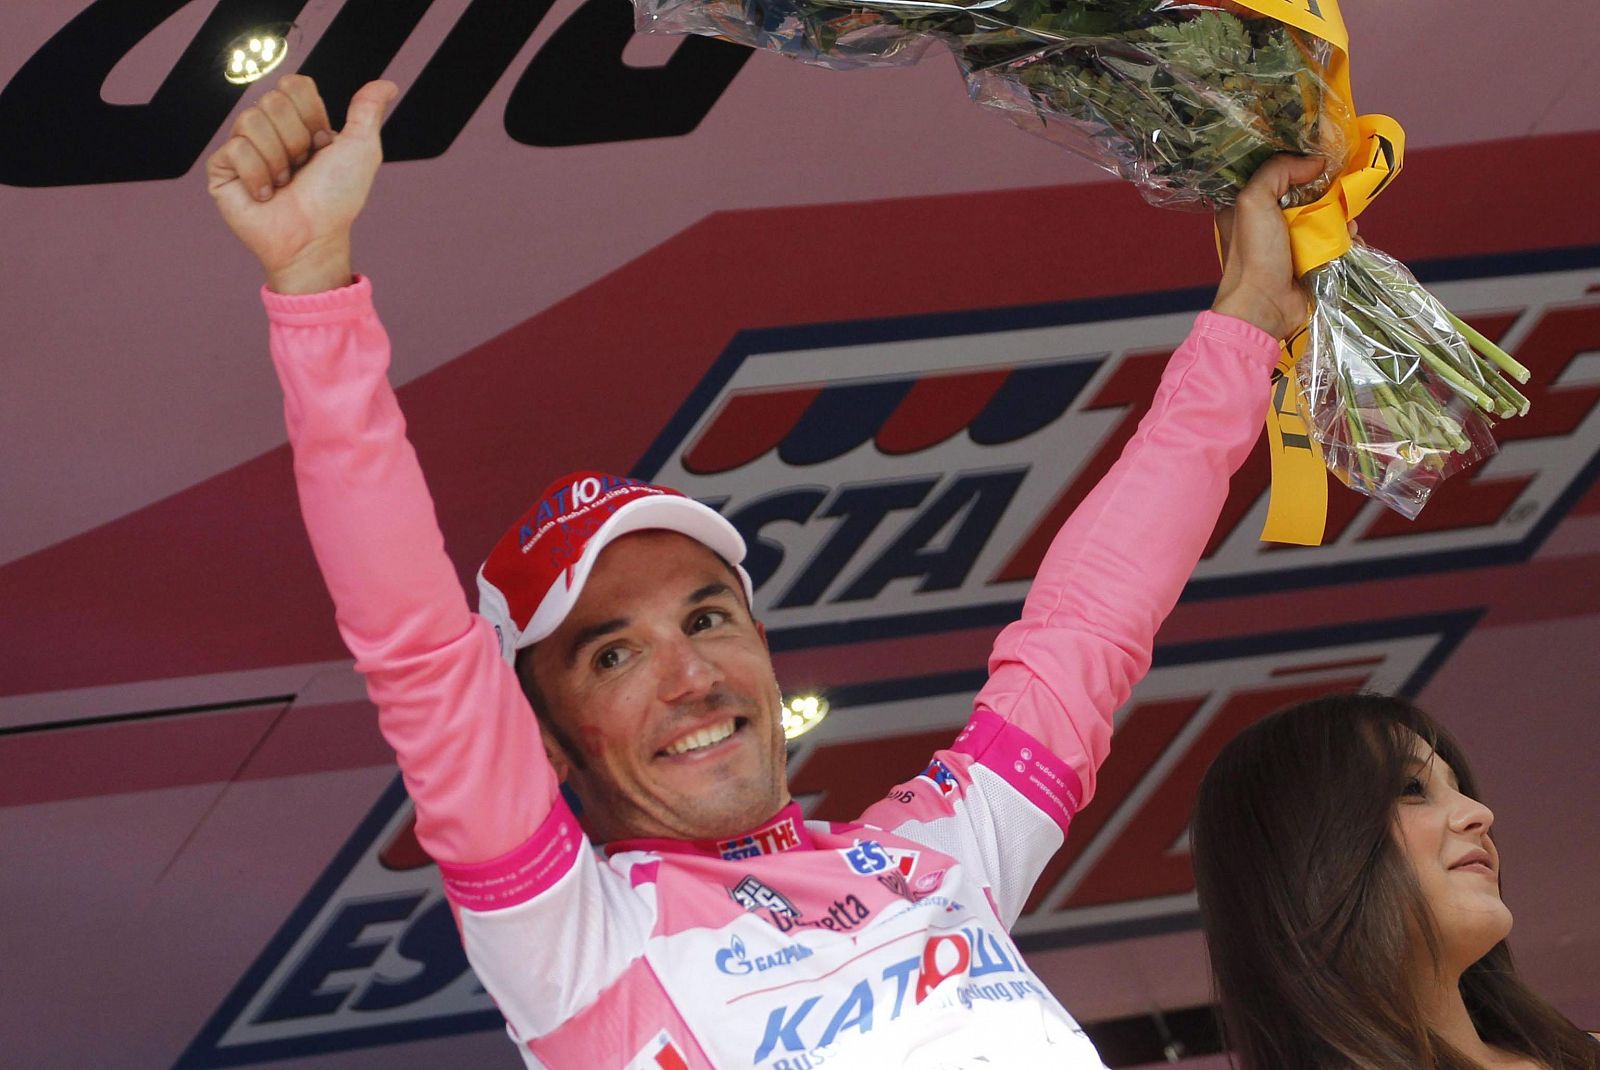 El ciclista español del Katusha, Joaquim 'Purito' Rodríguez, celebra en el podio la victoria conseguida en la decimoséptima etapa del Giro d'Italia